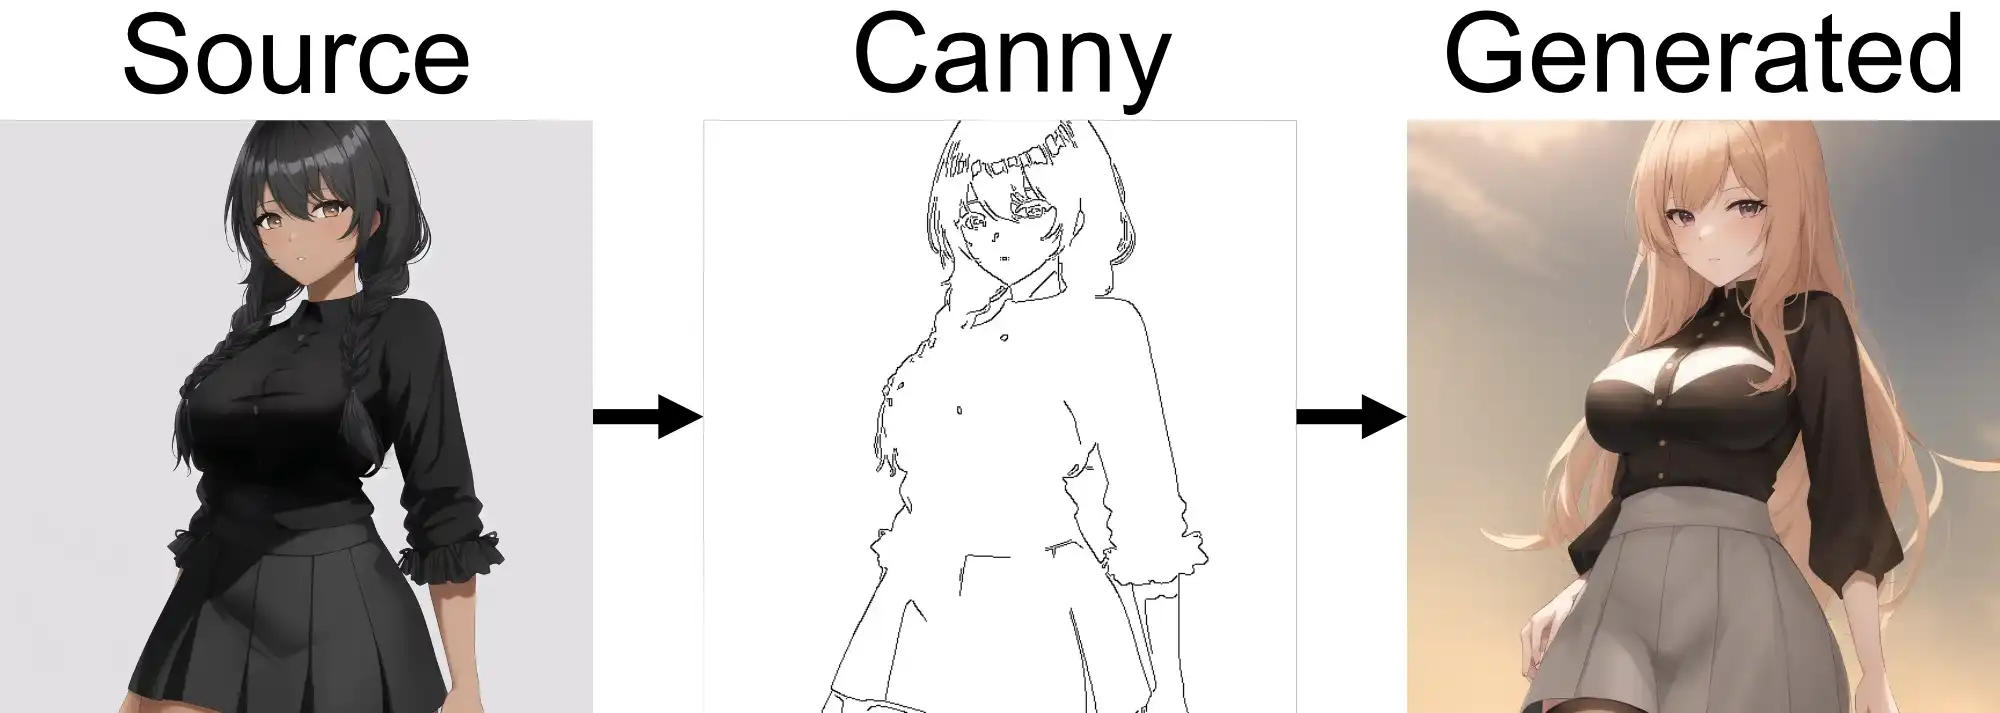 Canny model